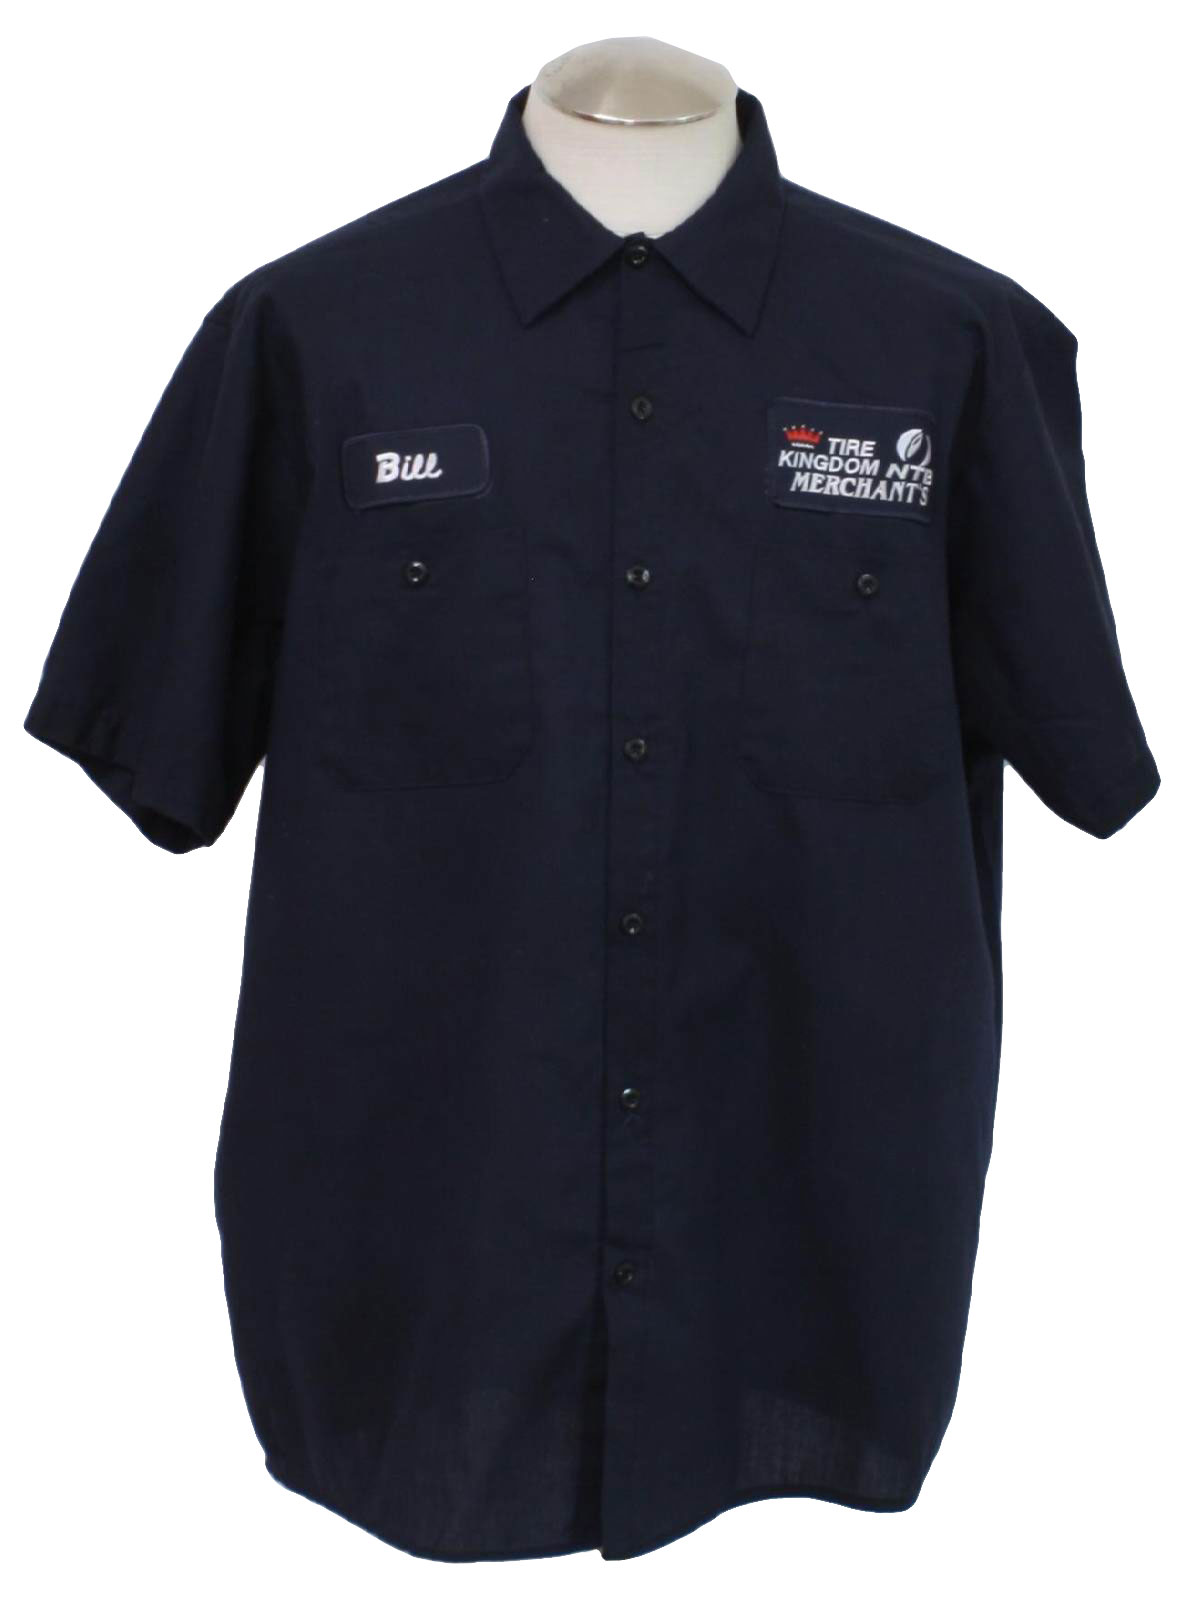 Shirt: 90s -Cintas- Mens dark navy blue, shortsleeve, button front ...